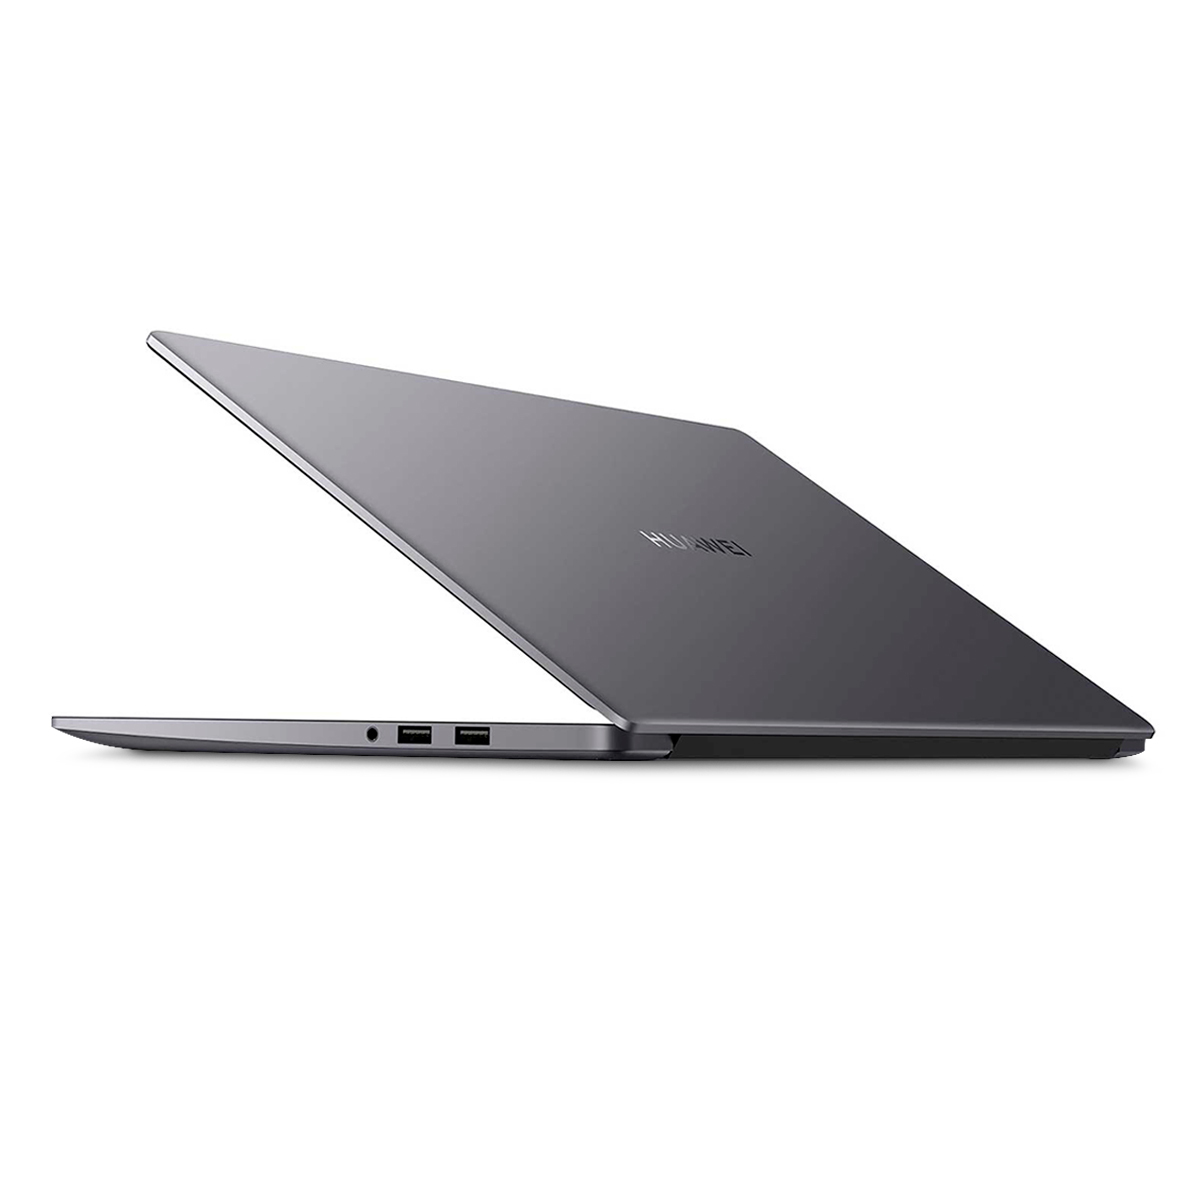 Laptop Huawei MateBook D 15 Intel Core i3  Pulg. 256gb SSD 8gb RAM Gris  | Office Depot Mexico